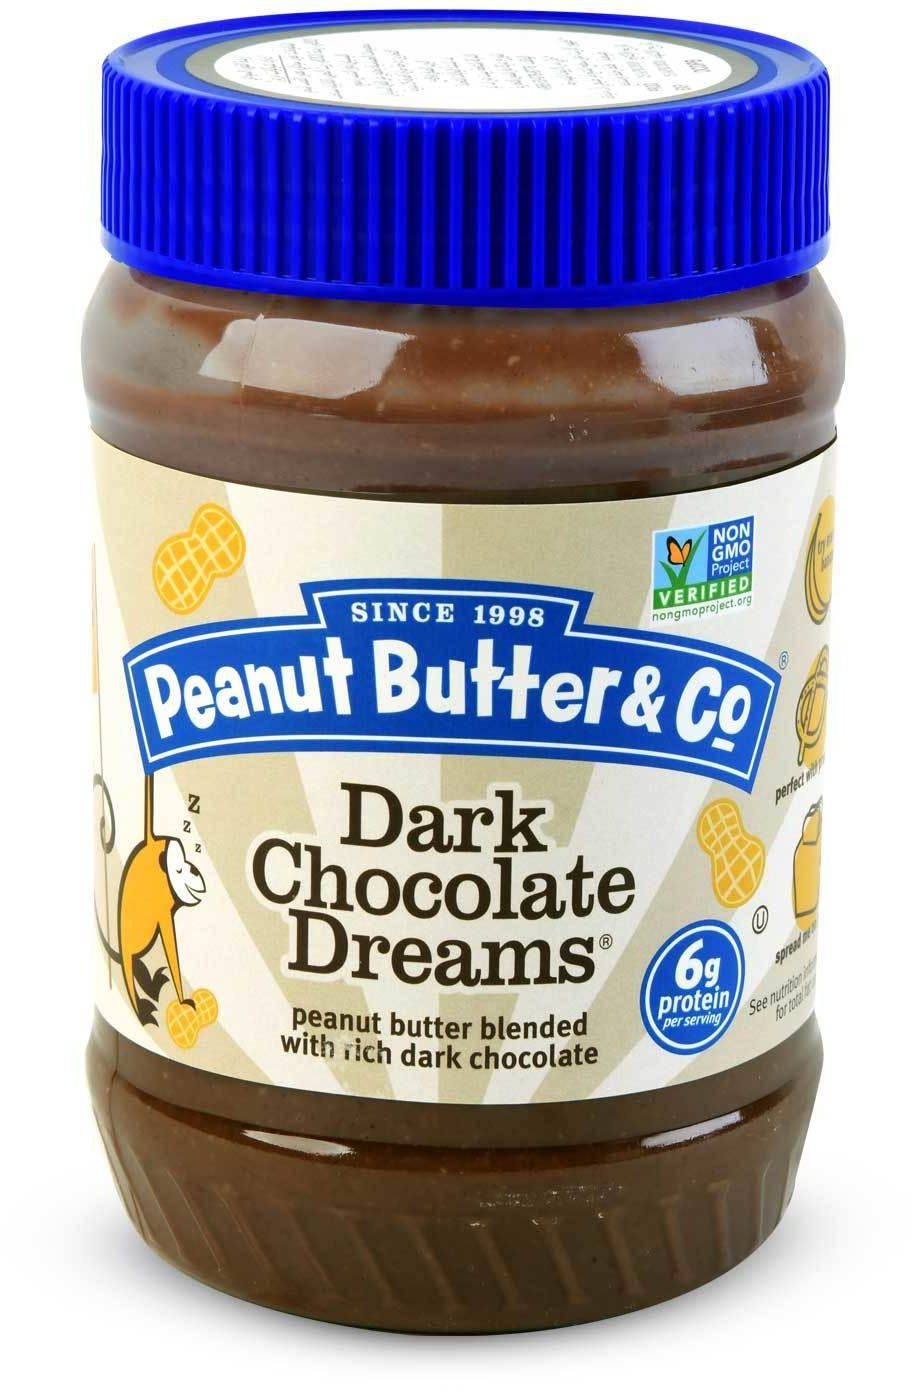 Peanut butter &amp; co dark chocolate dreams 454 g